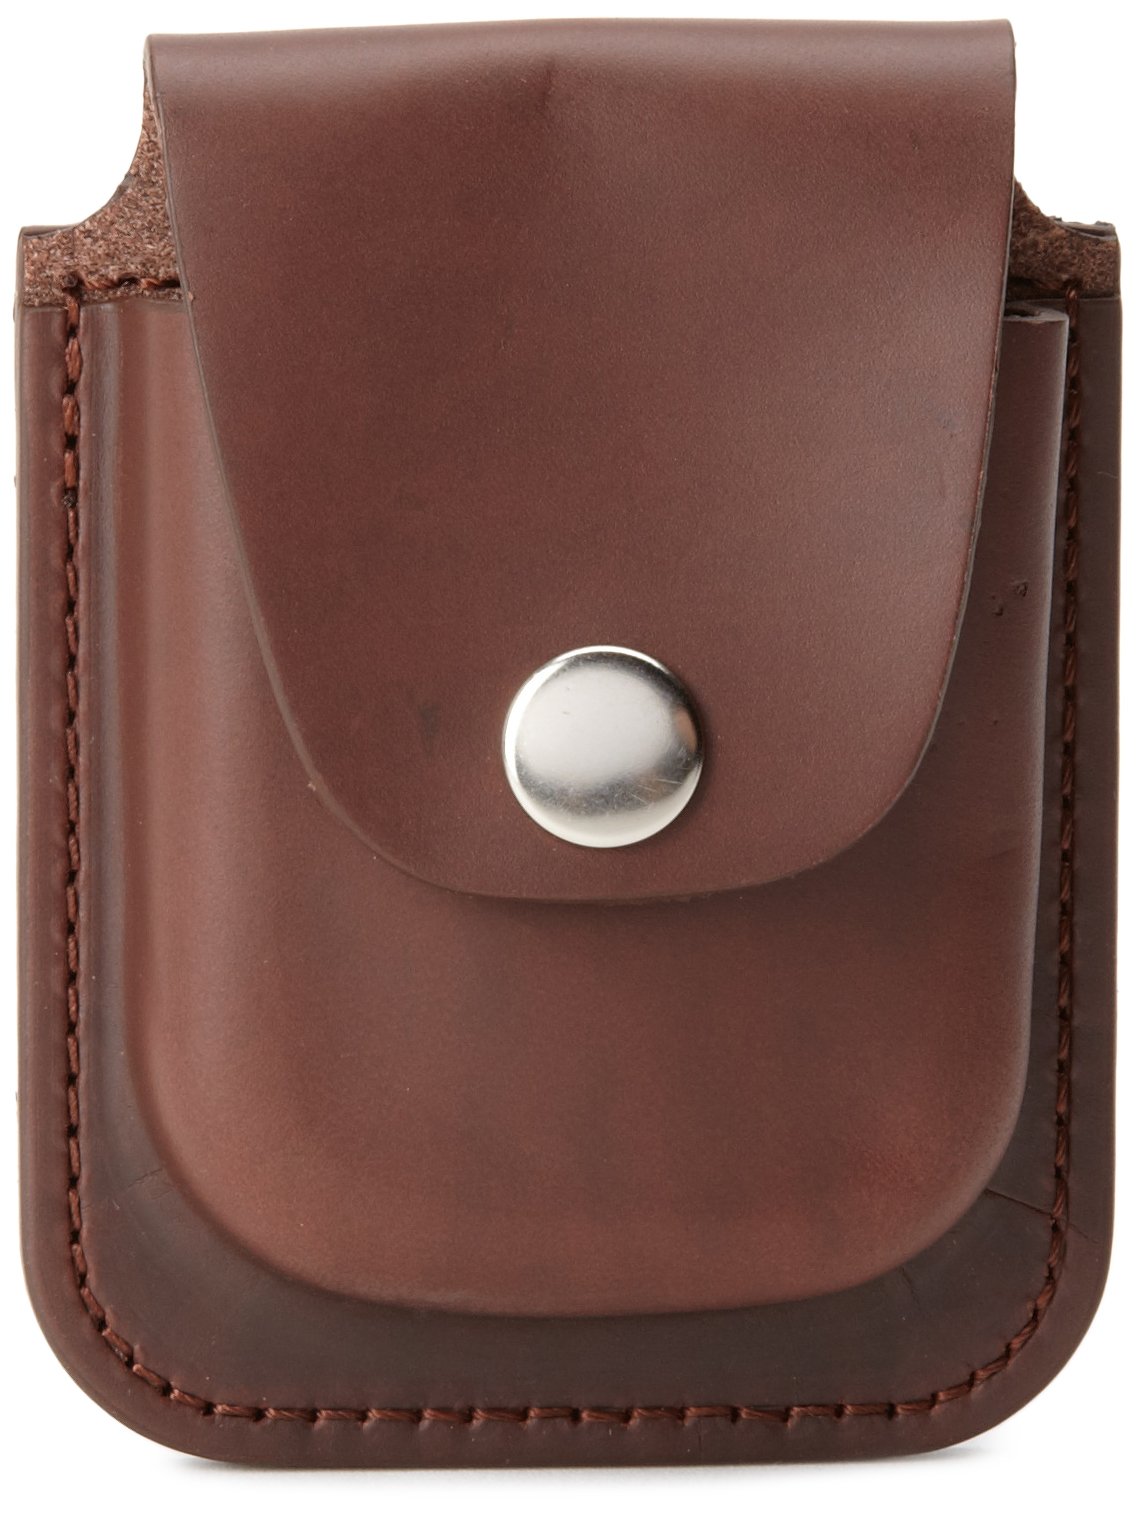 Charles-Hubert, Paris 3572-5 Brown Leather 56mm Pocket Watch Holder